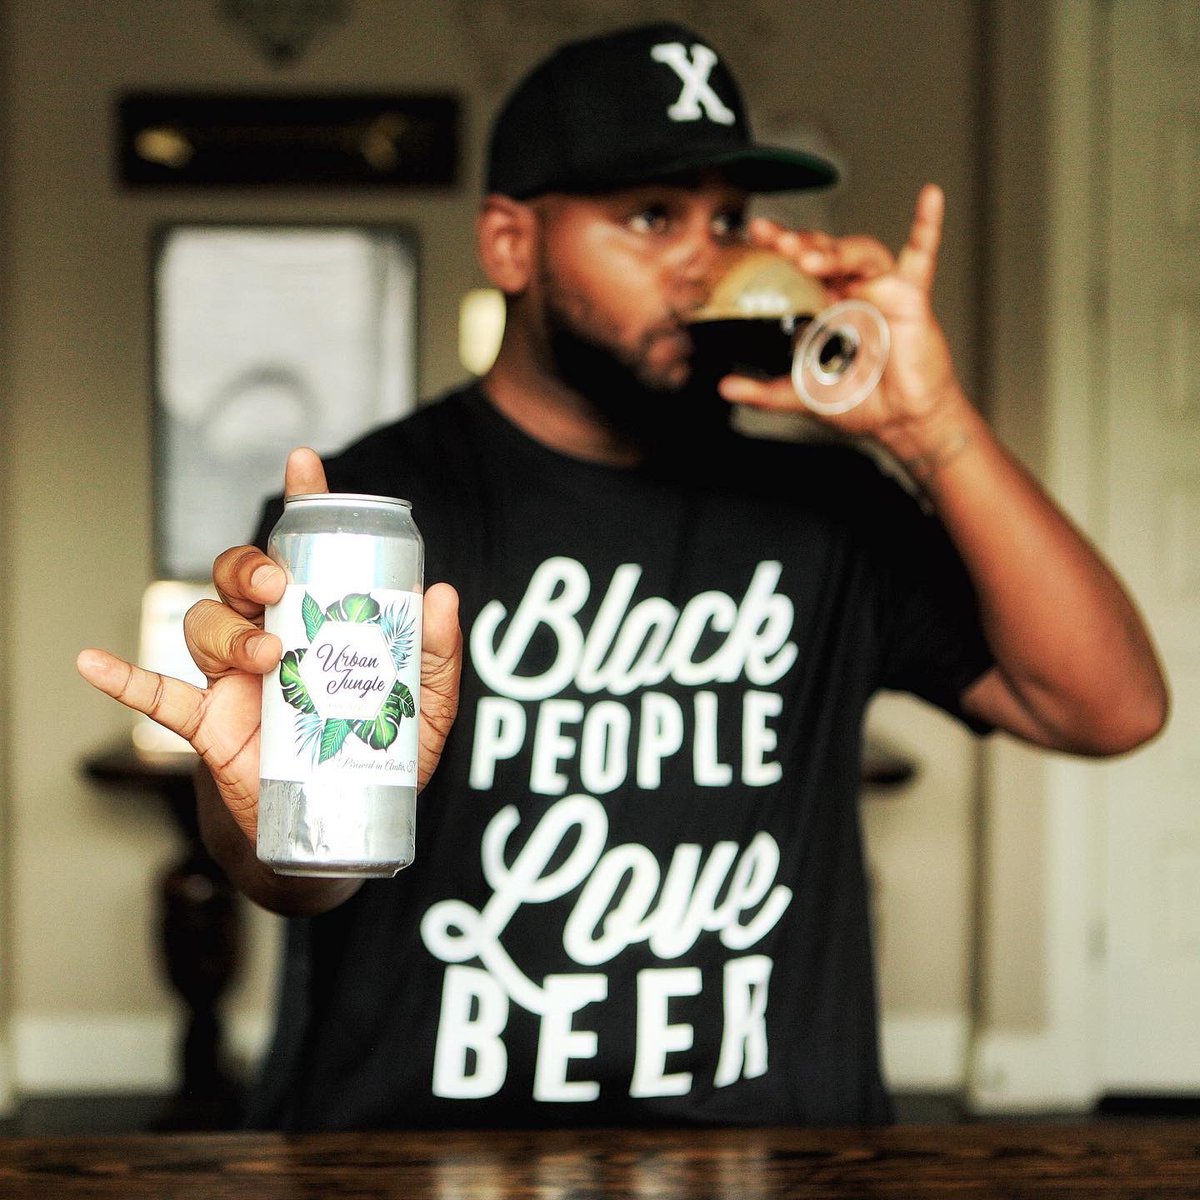 Black People Love Beer too! #Blackisbeautiful #blacklivesmatter #idontdrinkbeerwithracists instagram.com/p/CCHyJ3-HTUO/…